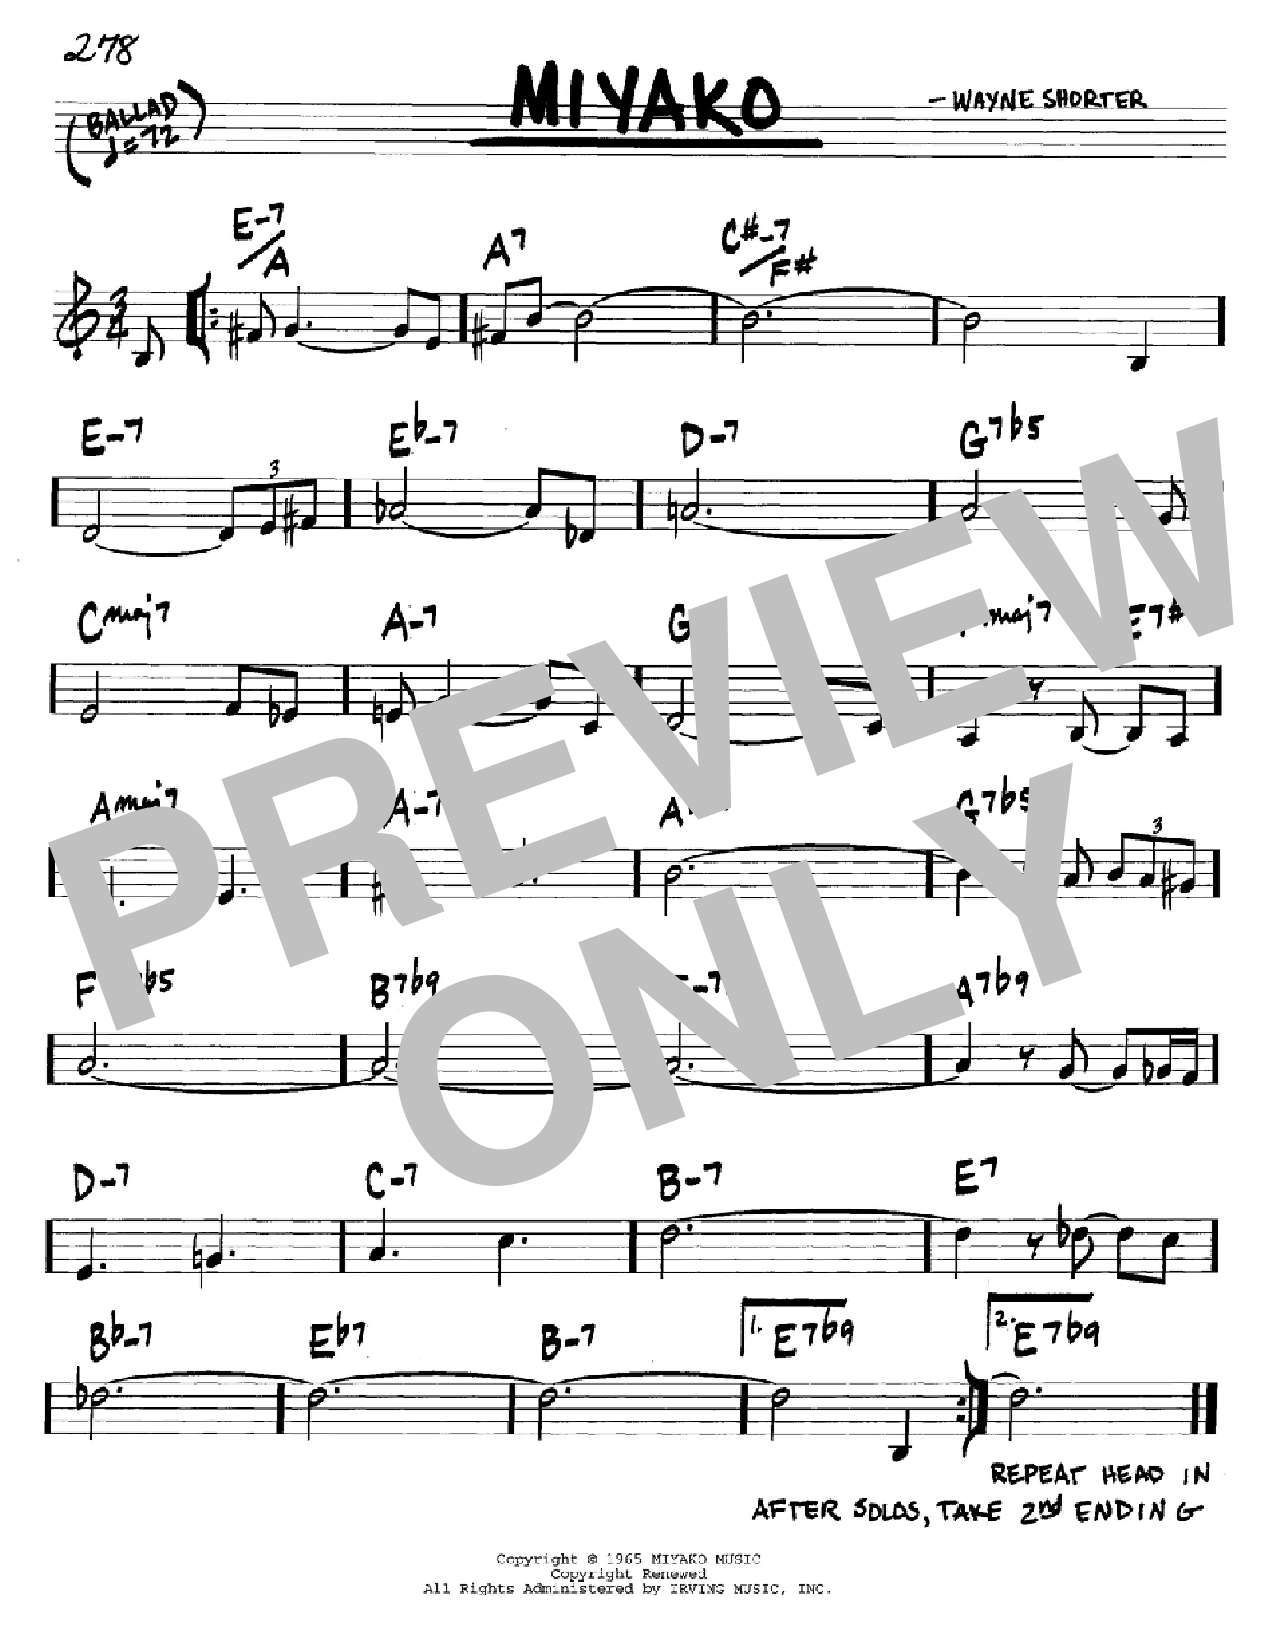 Wayne Shorter Miyako sheet music notes and chords arranged for Tenor Sax Transcription